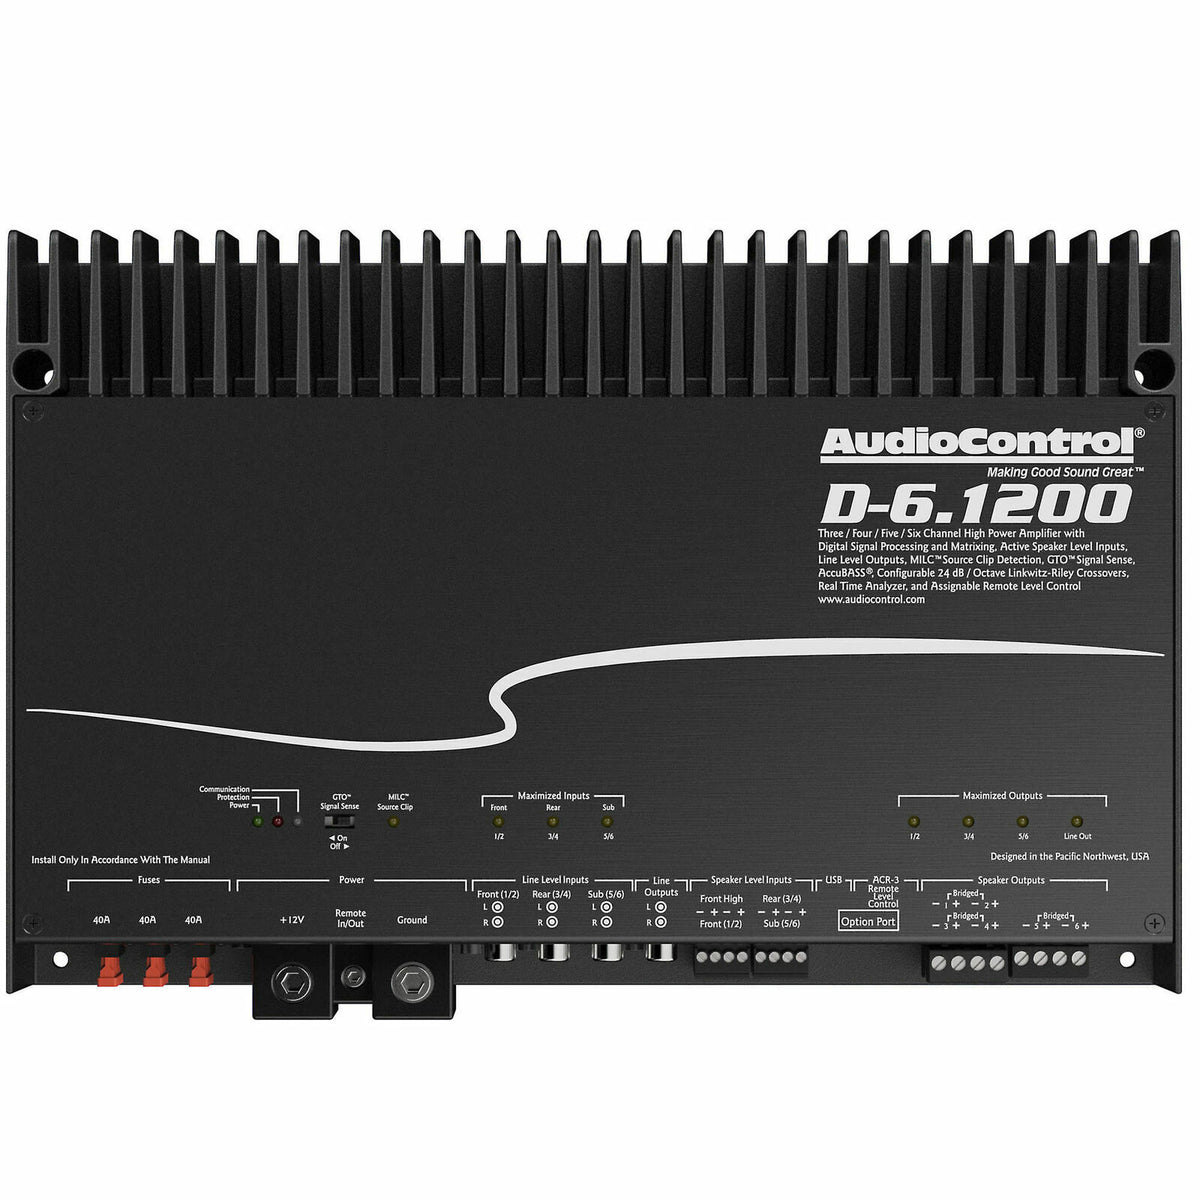 AudioControl D-6.1200 6-channel car amplifier with digital signal processing